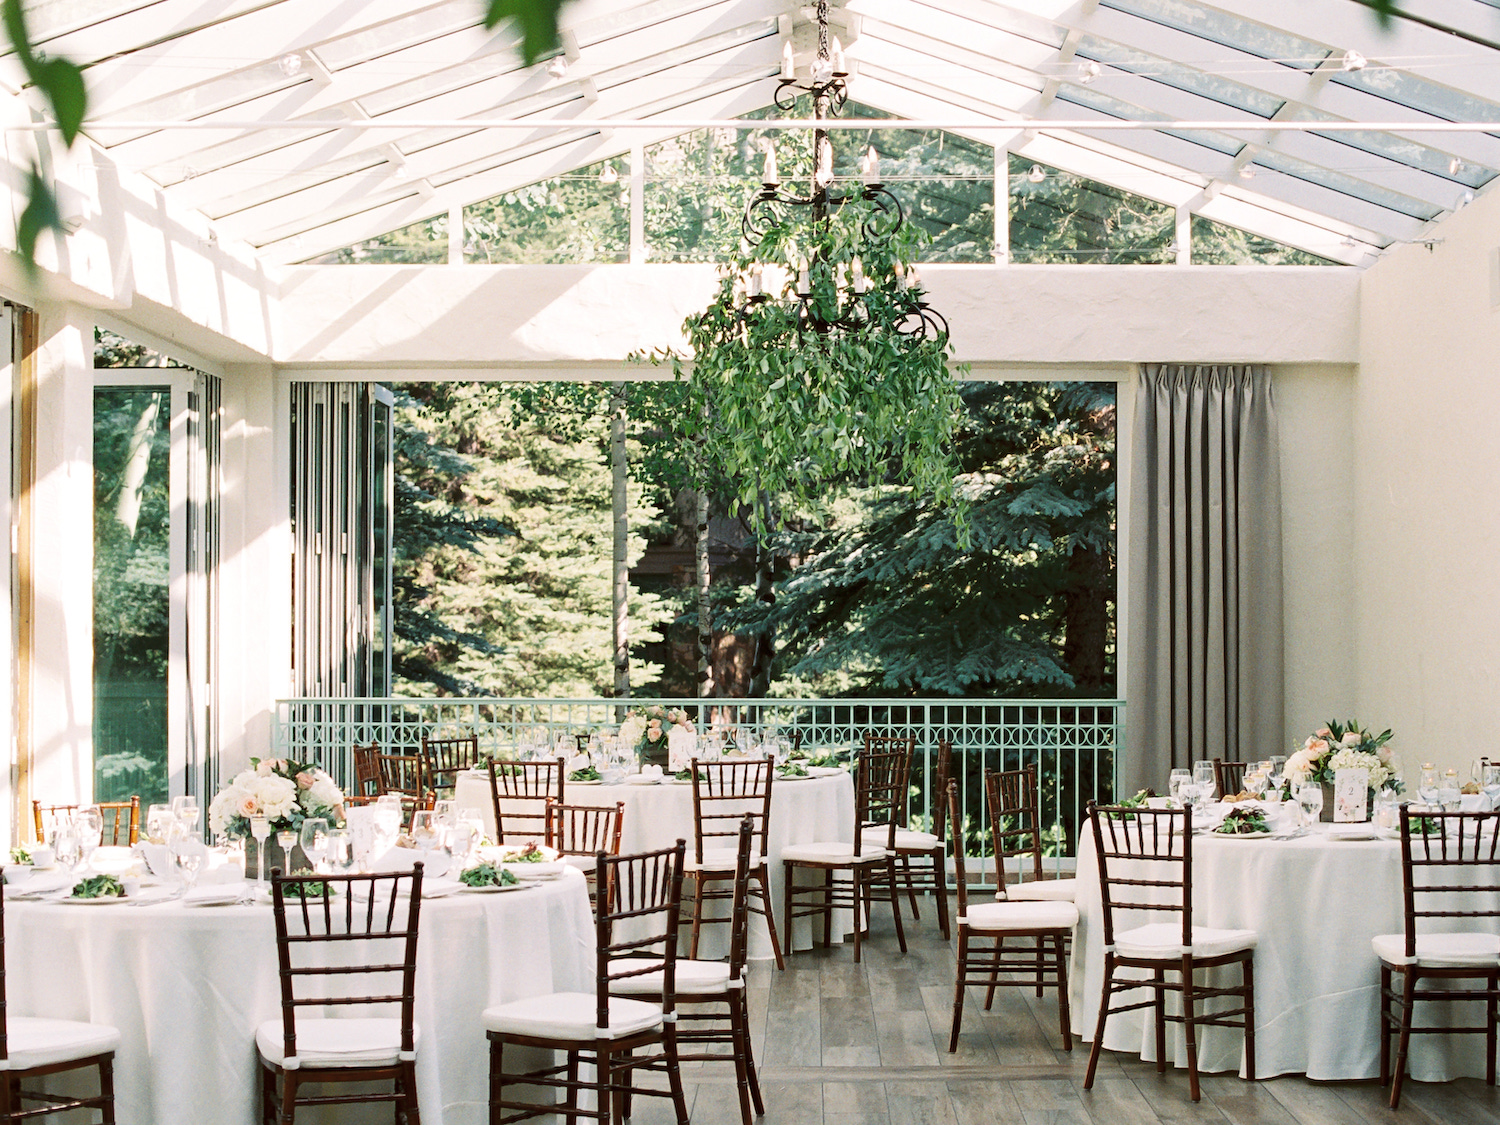 Sonnenalp wedding reception with greenery in chandeliers